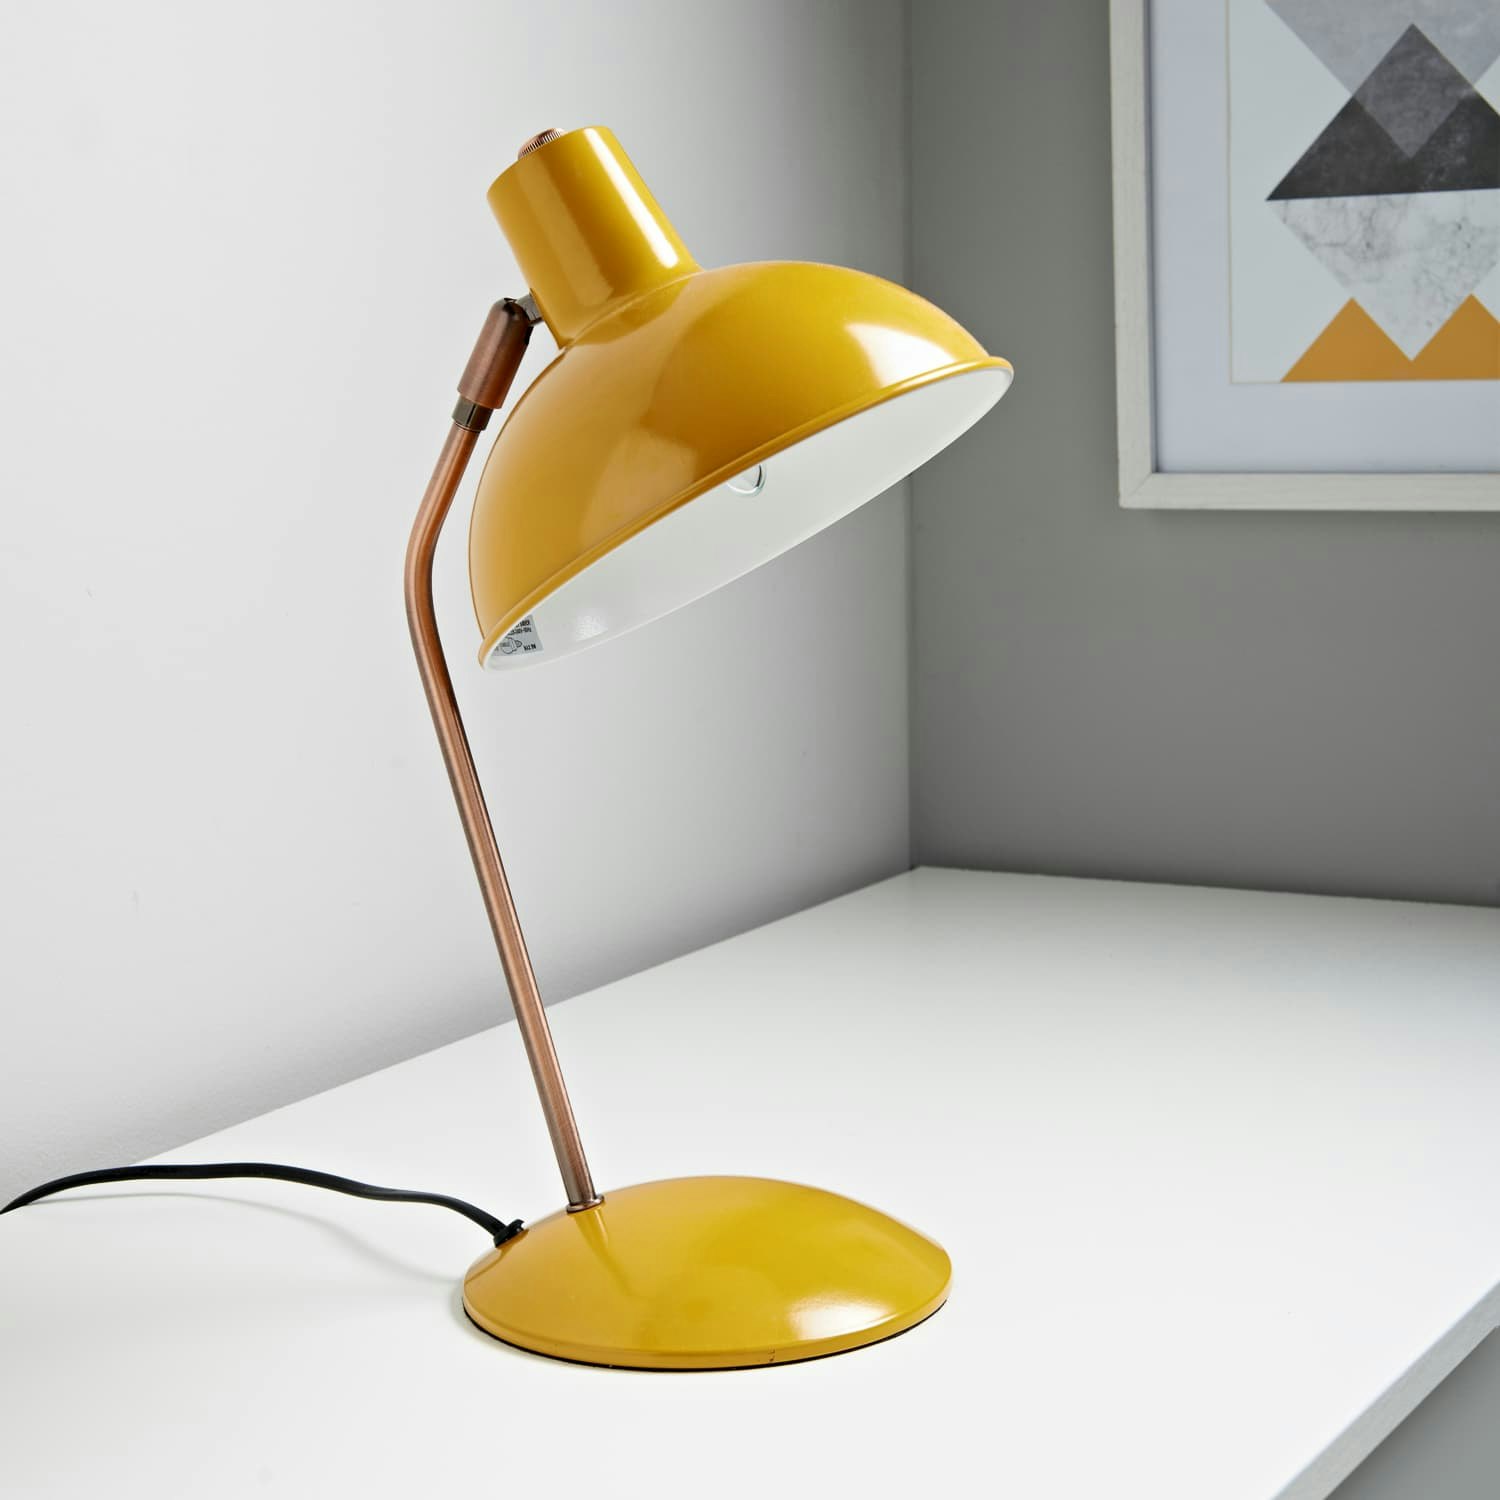 b&m desk lamp